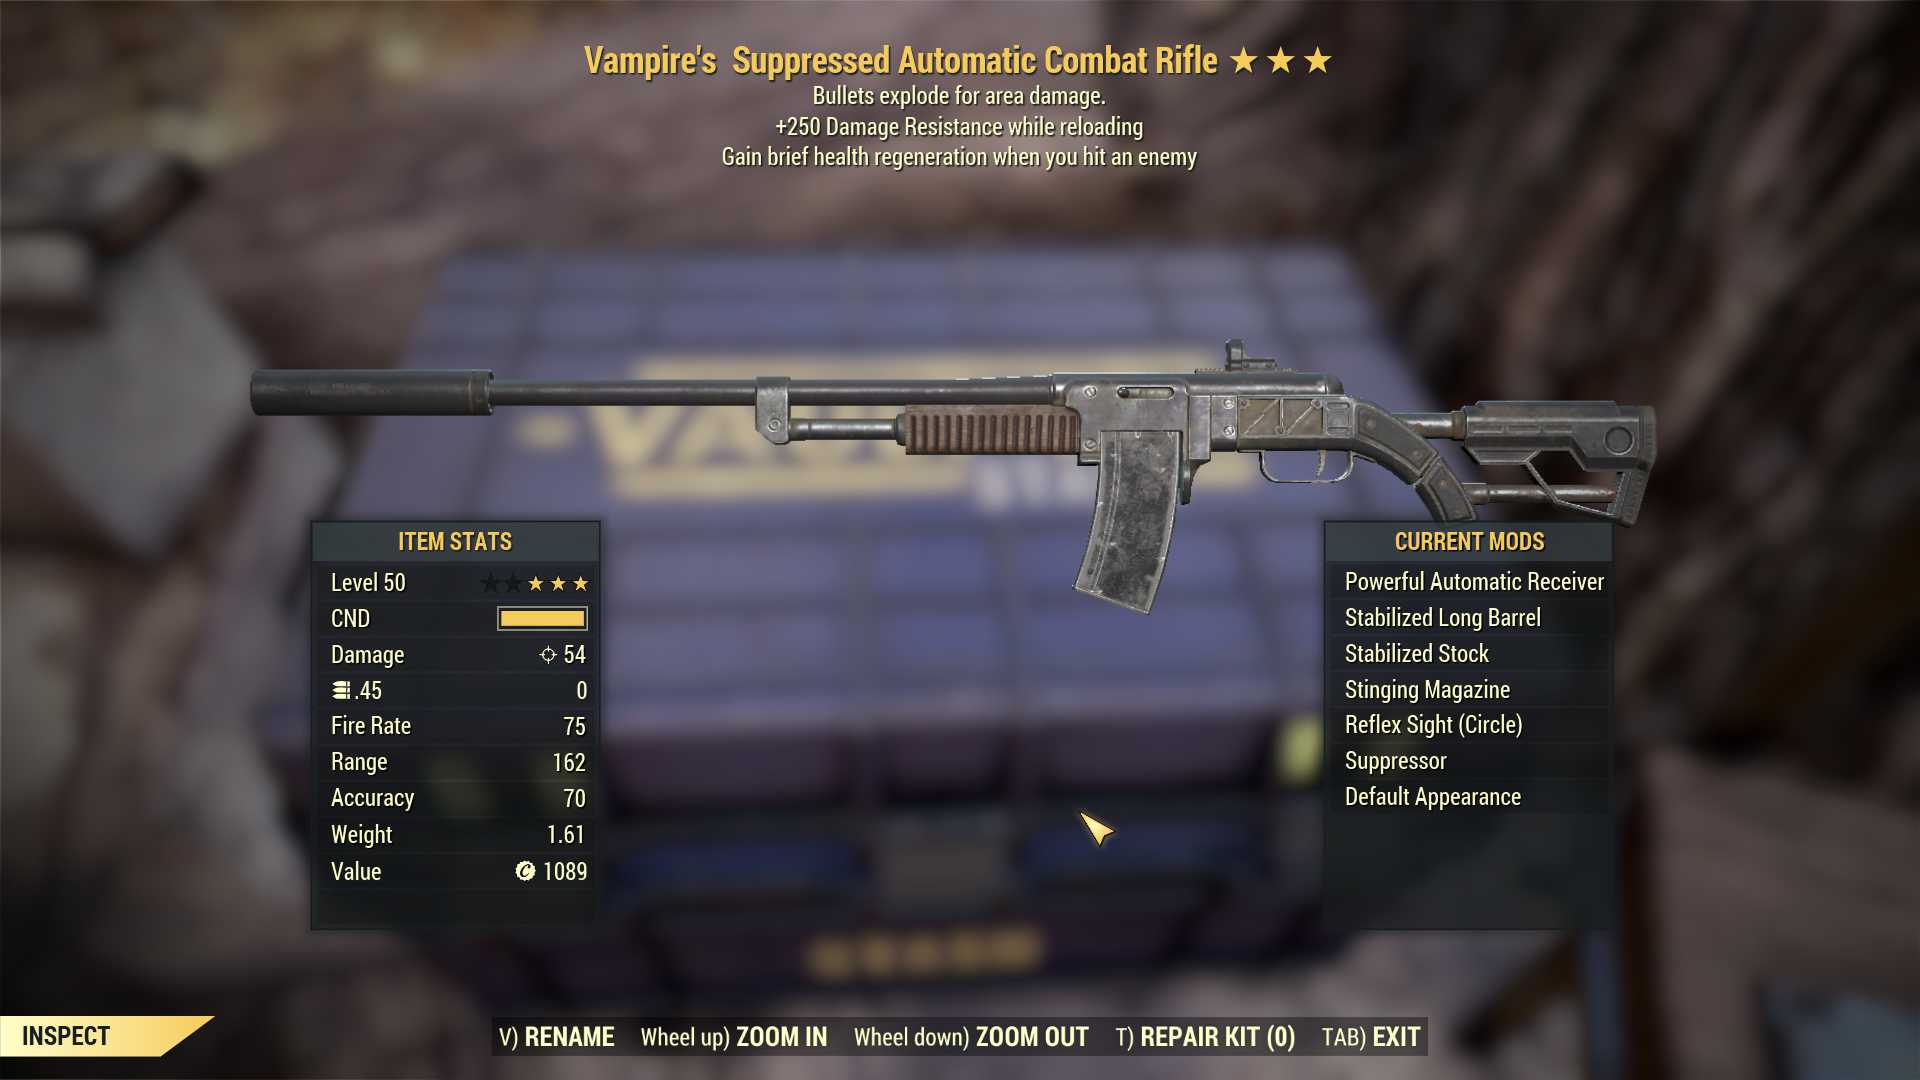 Vampire's Explosive Combat Rifle (+250 resist WR)